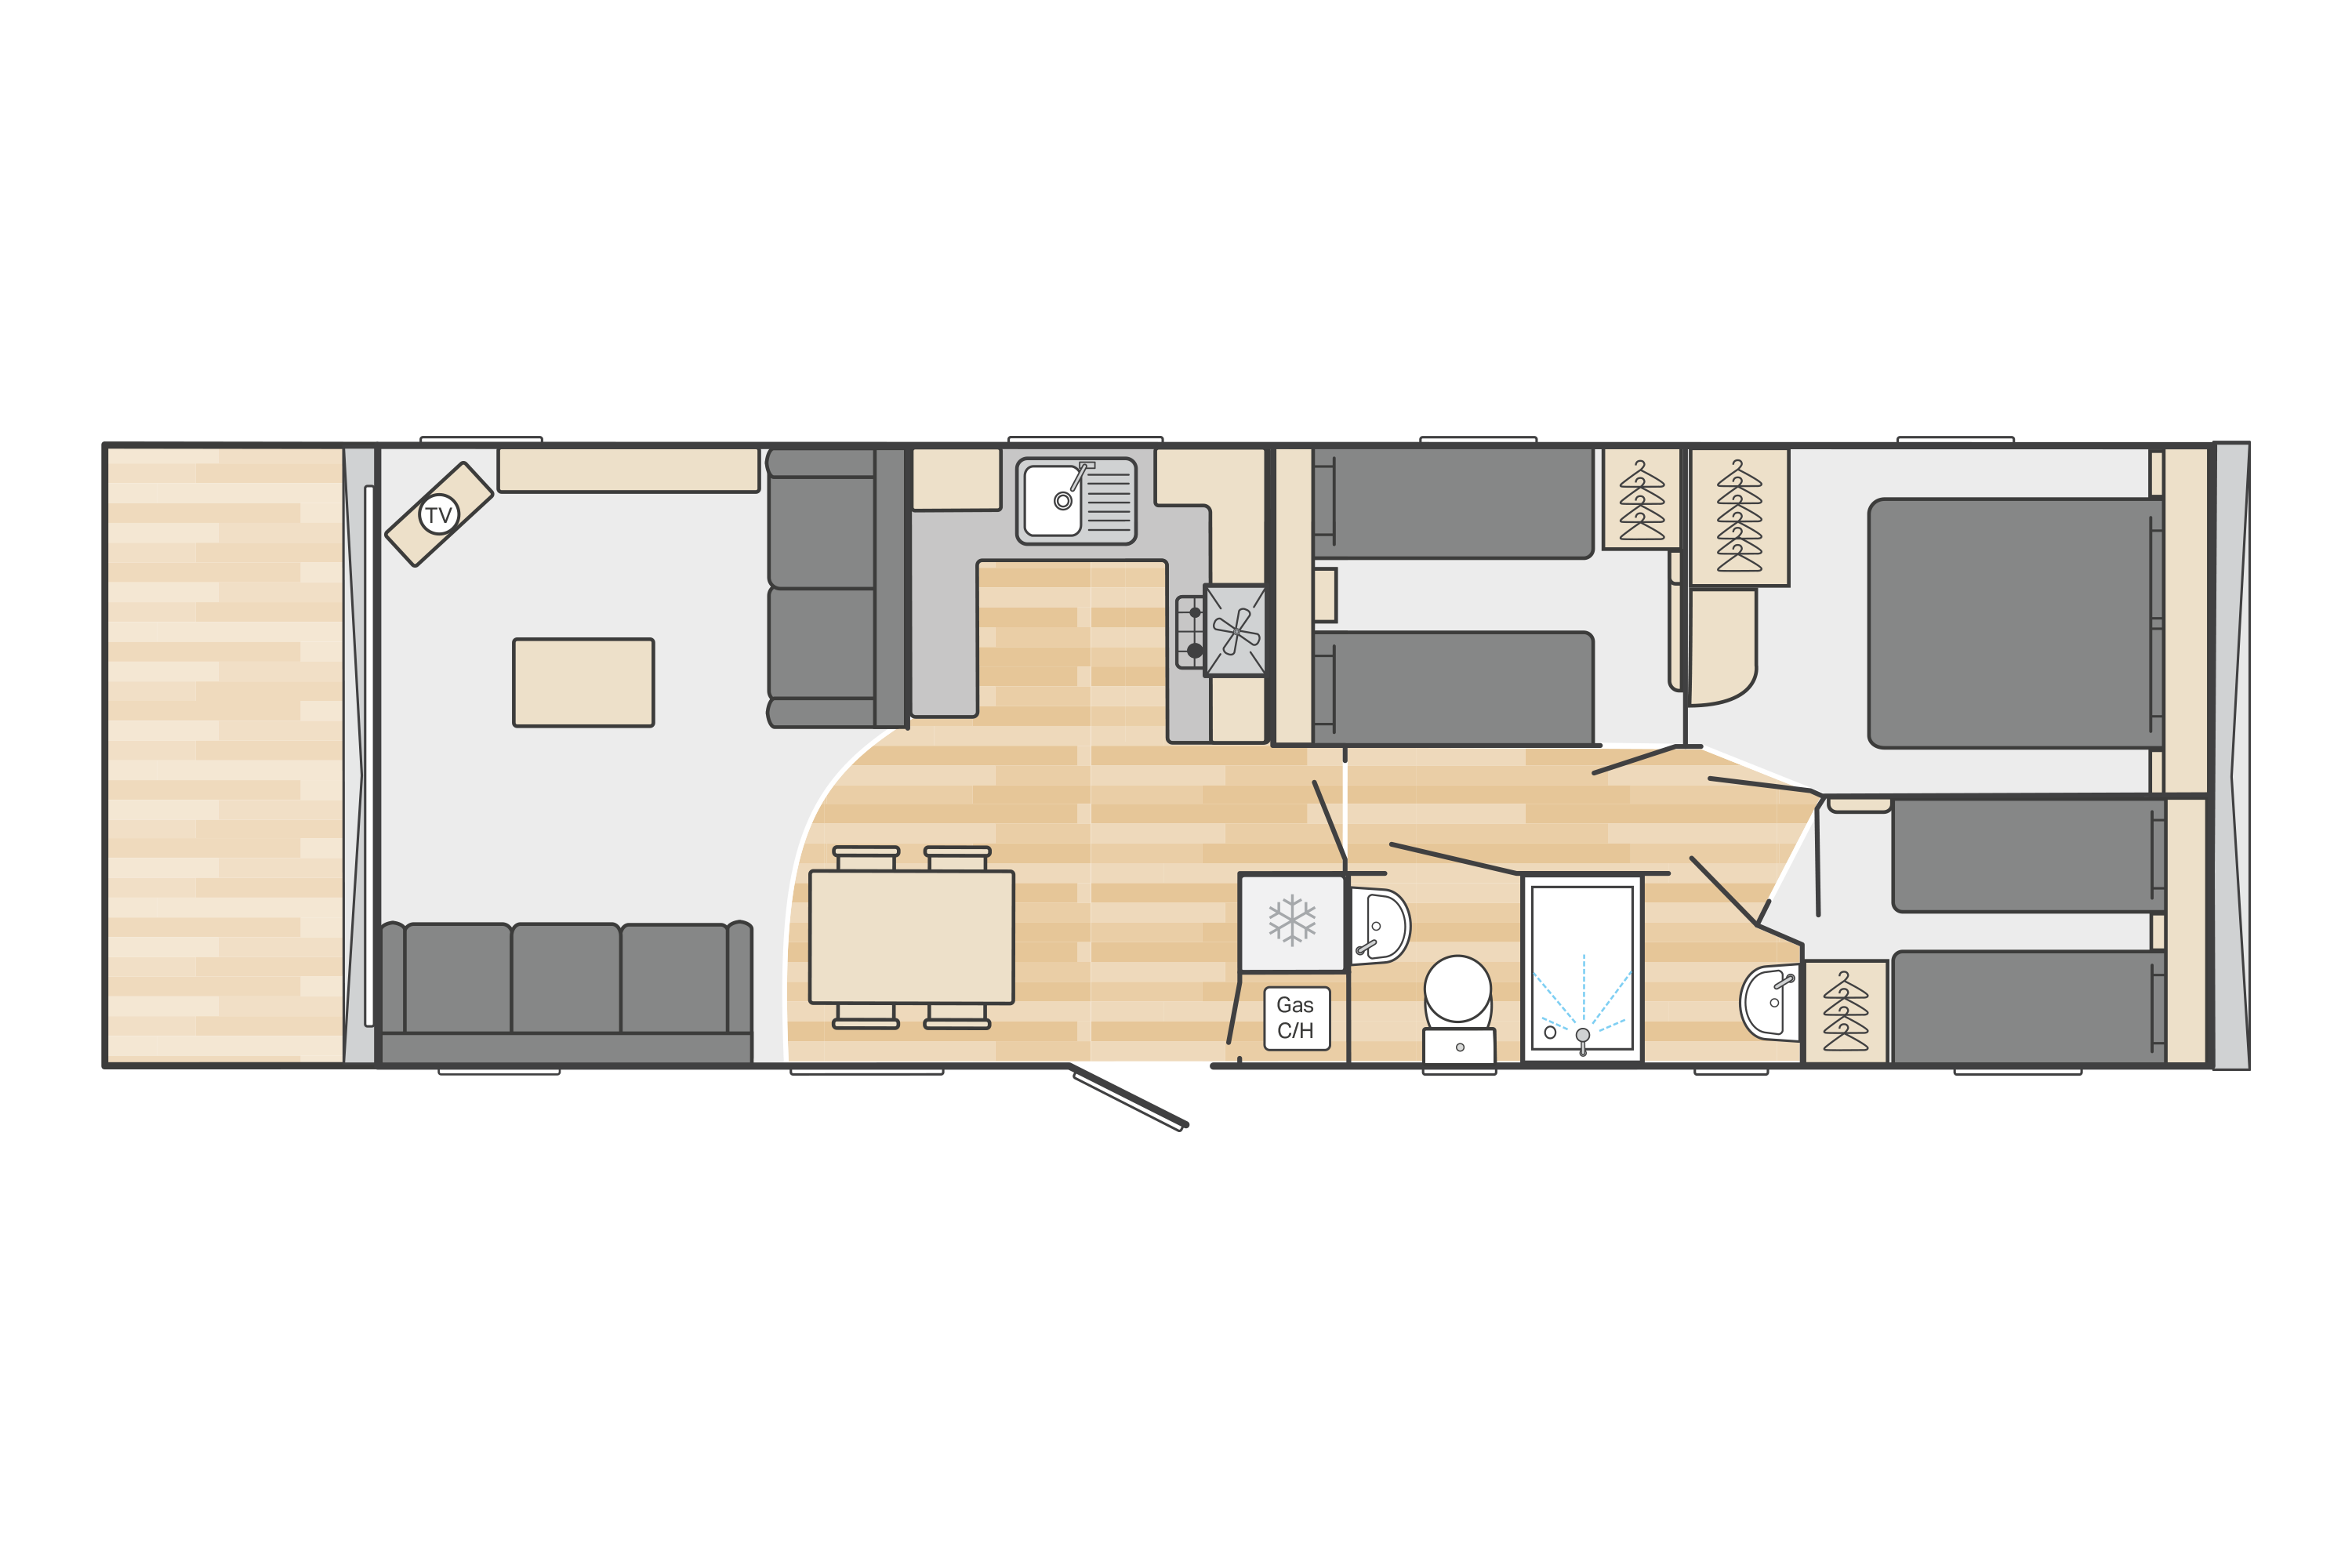 Bordeaux Escape 41' x 12' 3 Bedroom floorplan